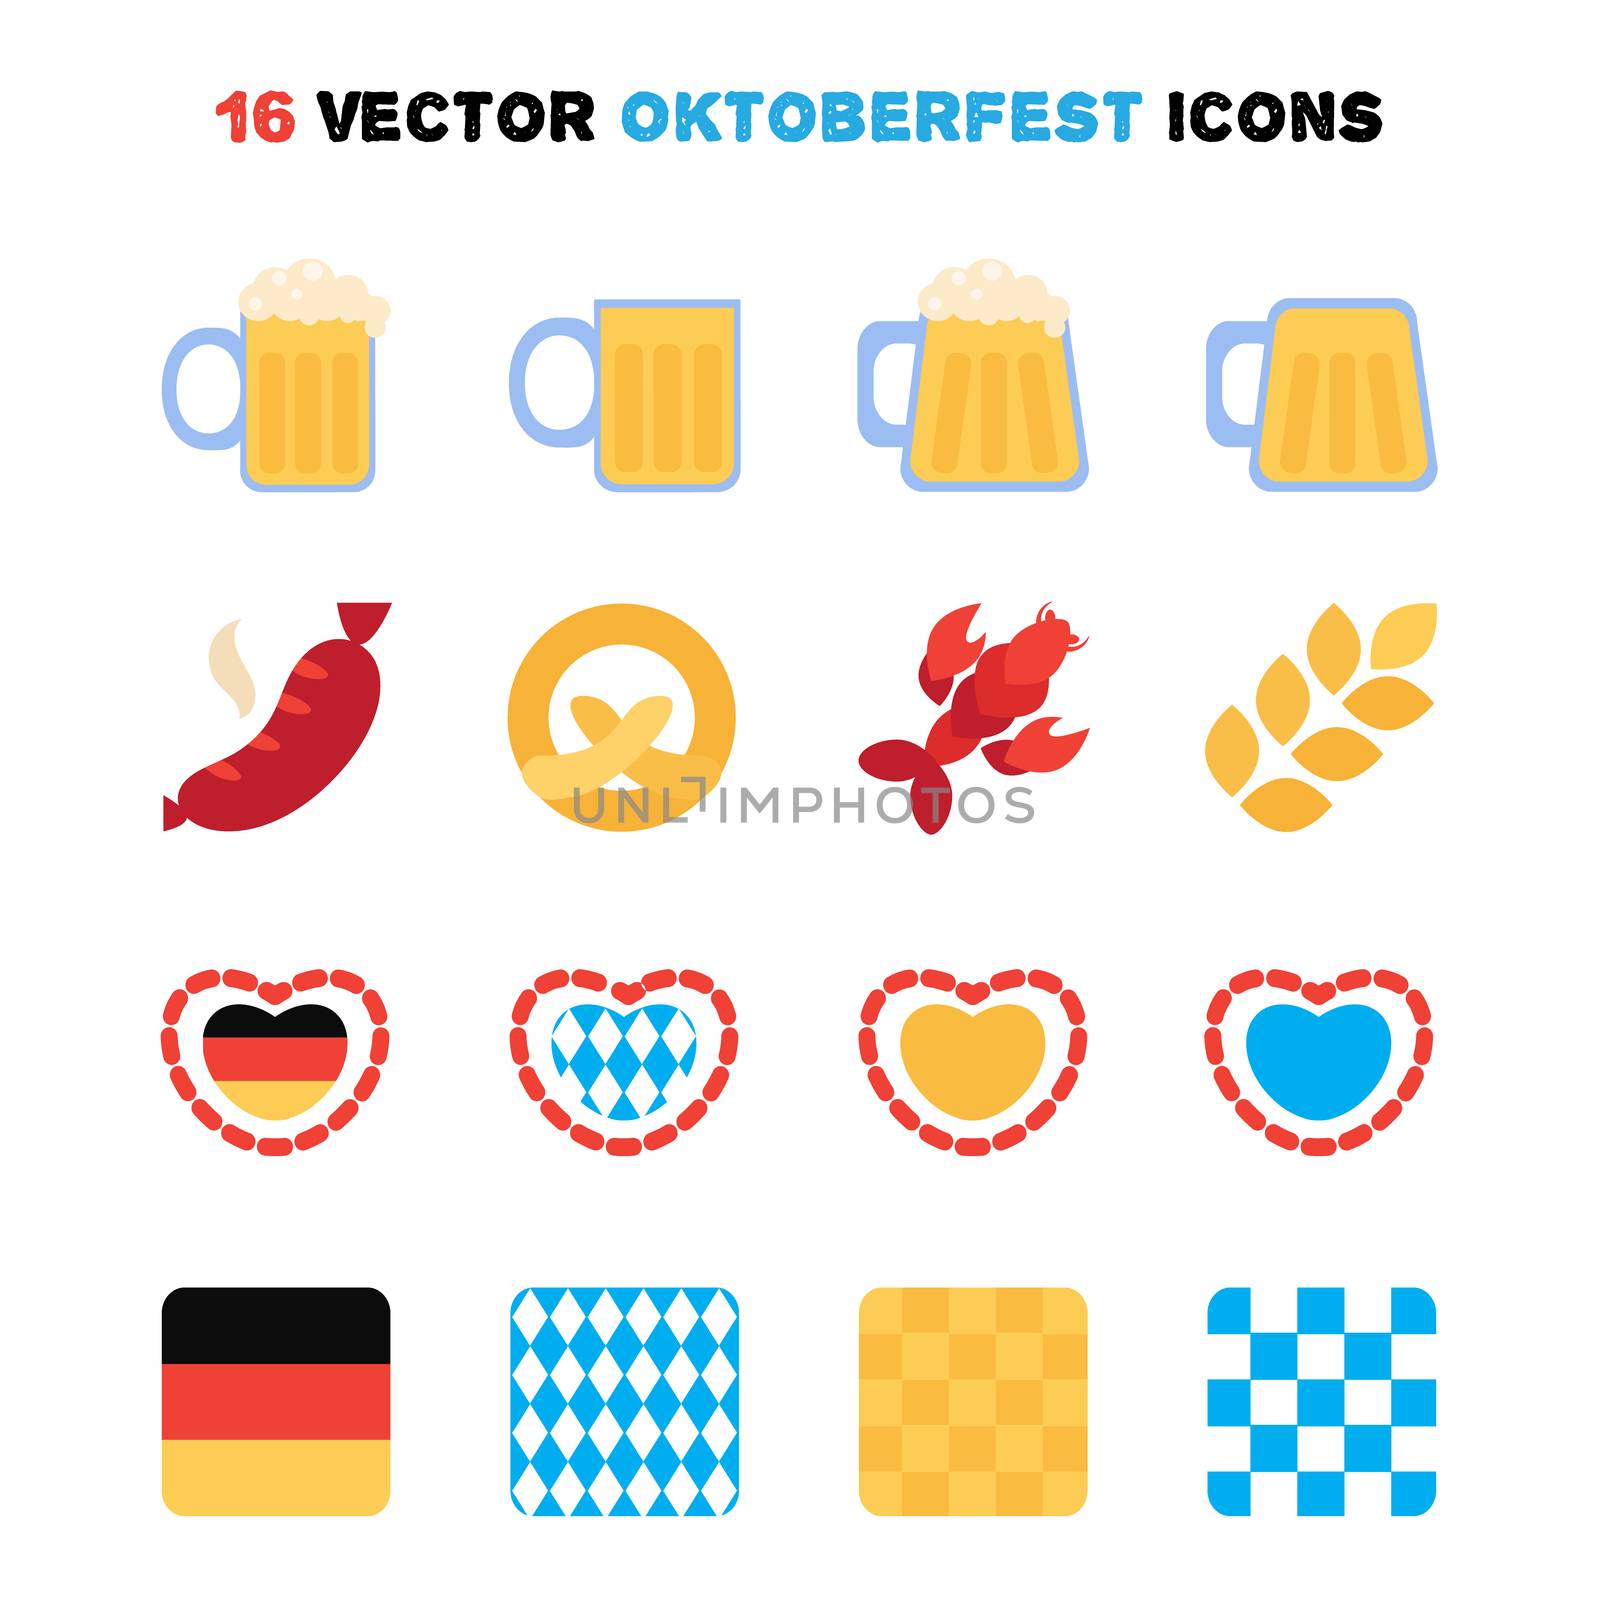 Oktoberfest icons set by barsrsind